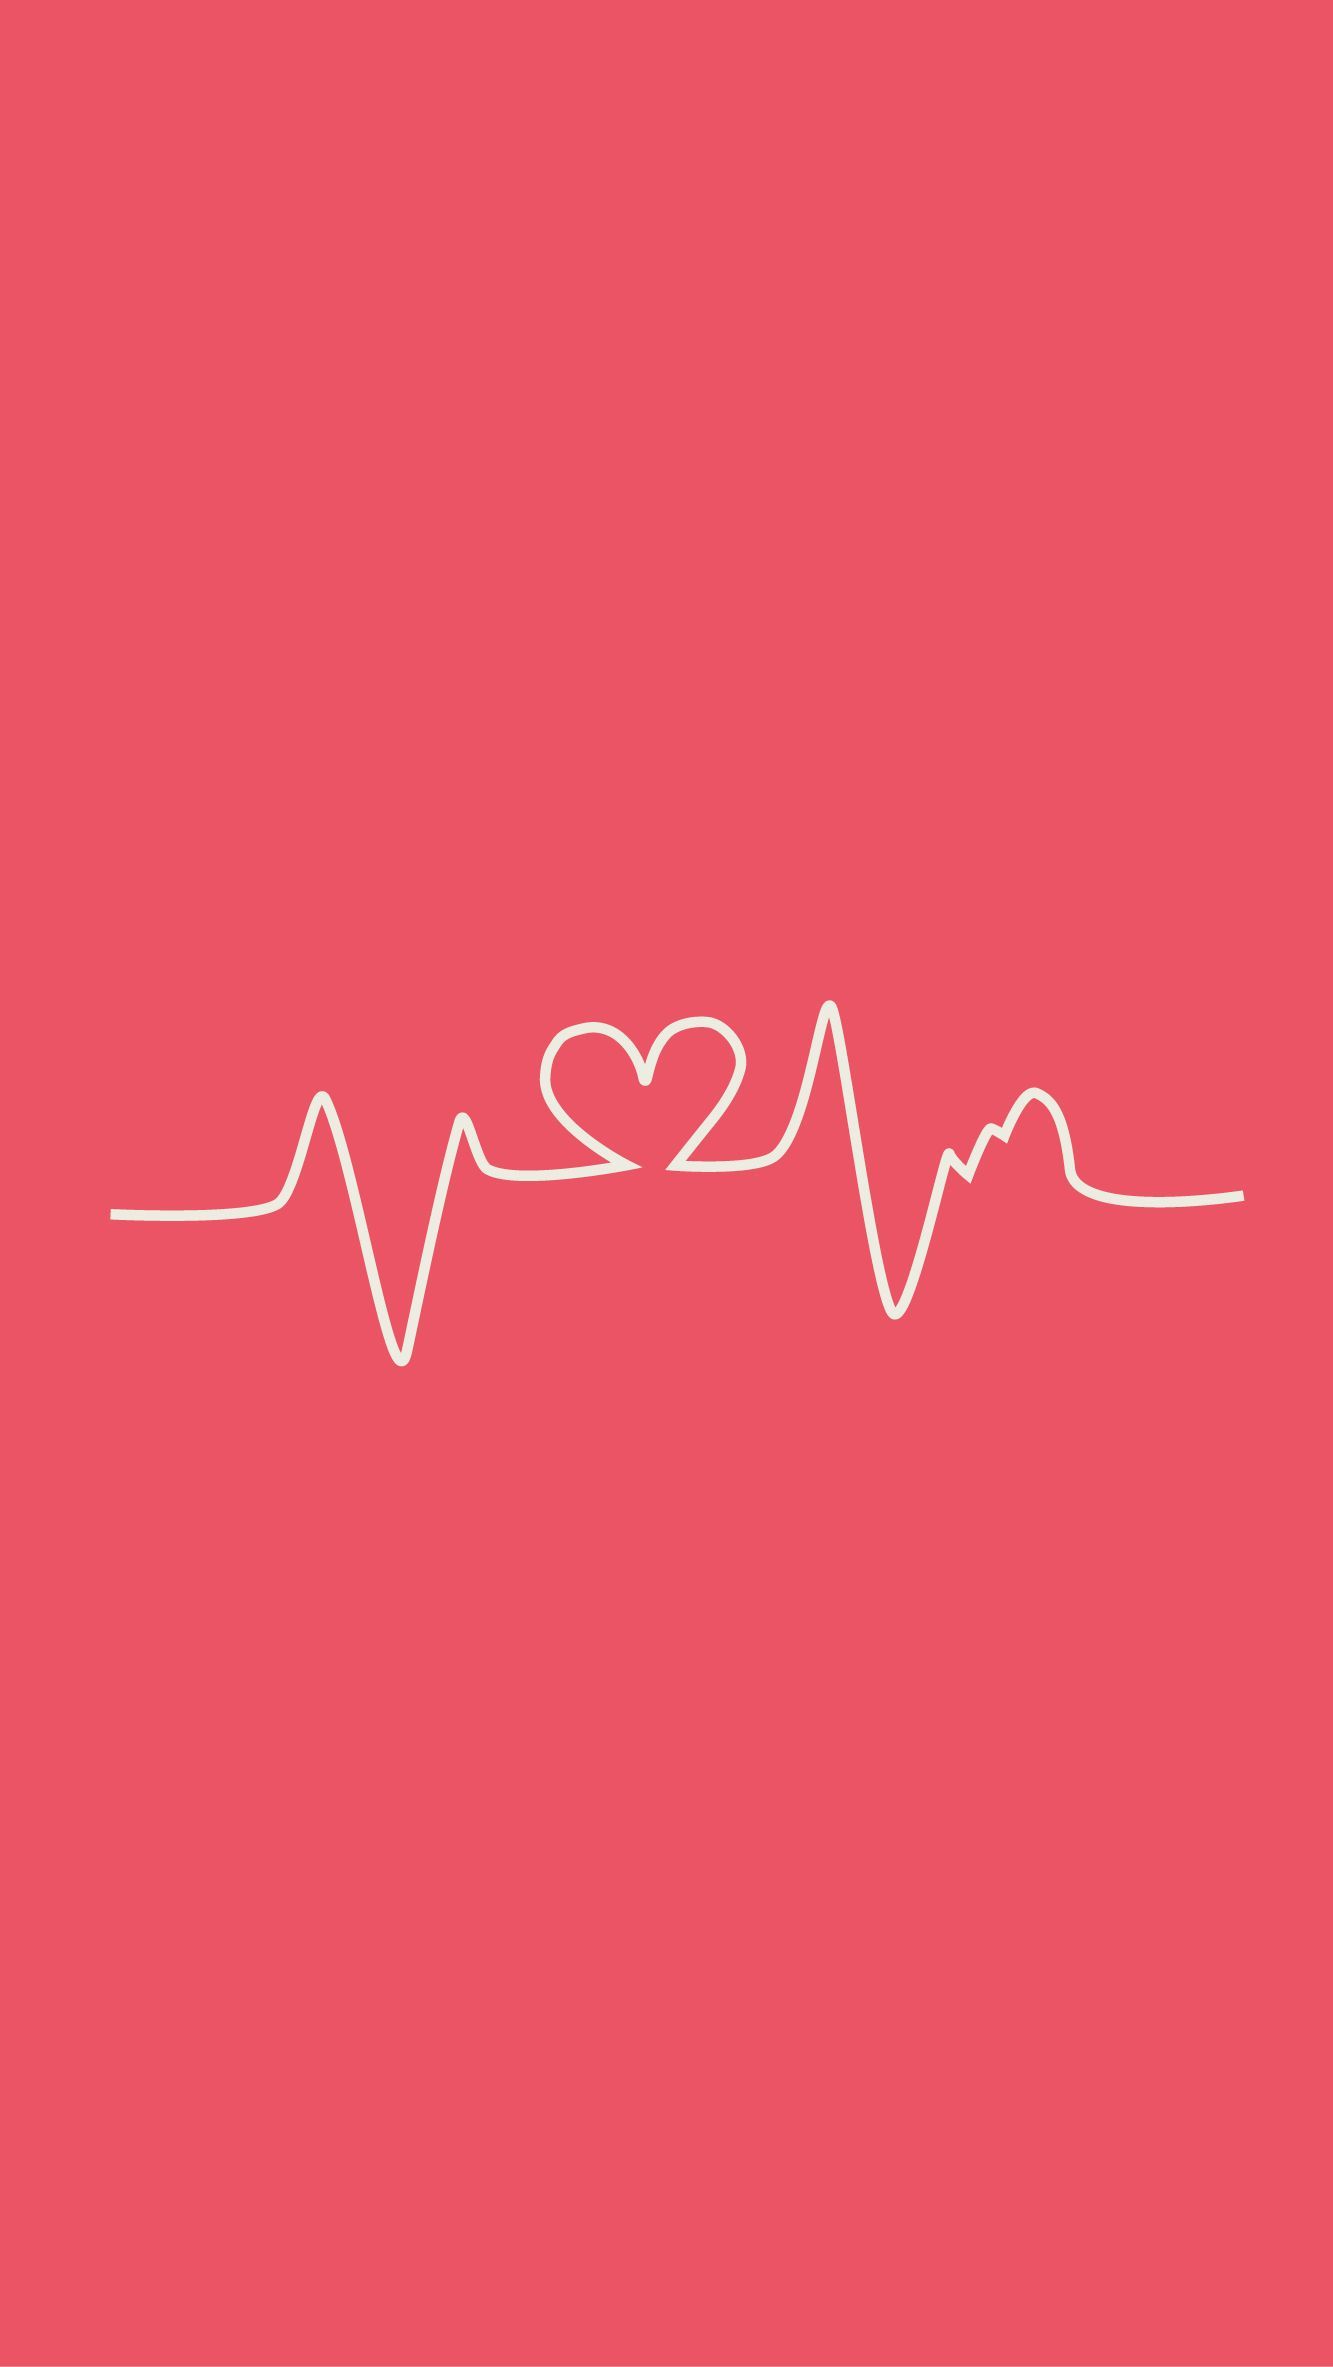 A heart shape made out of a heartbeat line on a pink background - Nurse